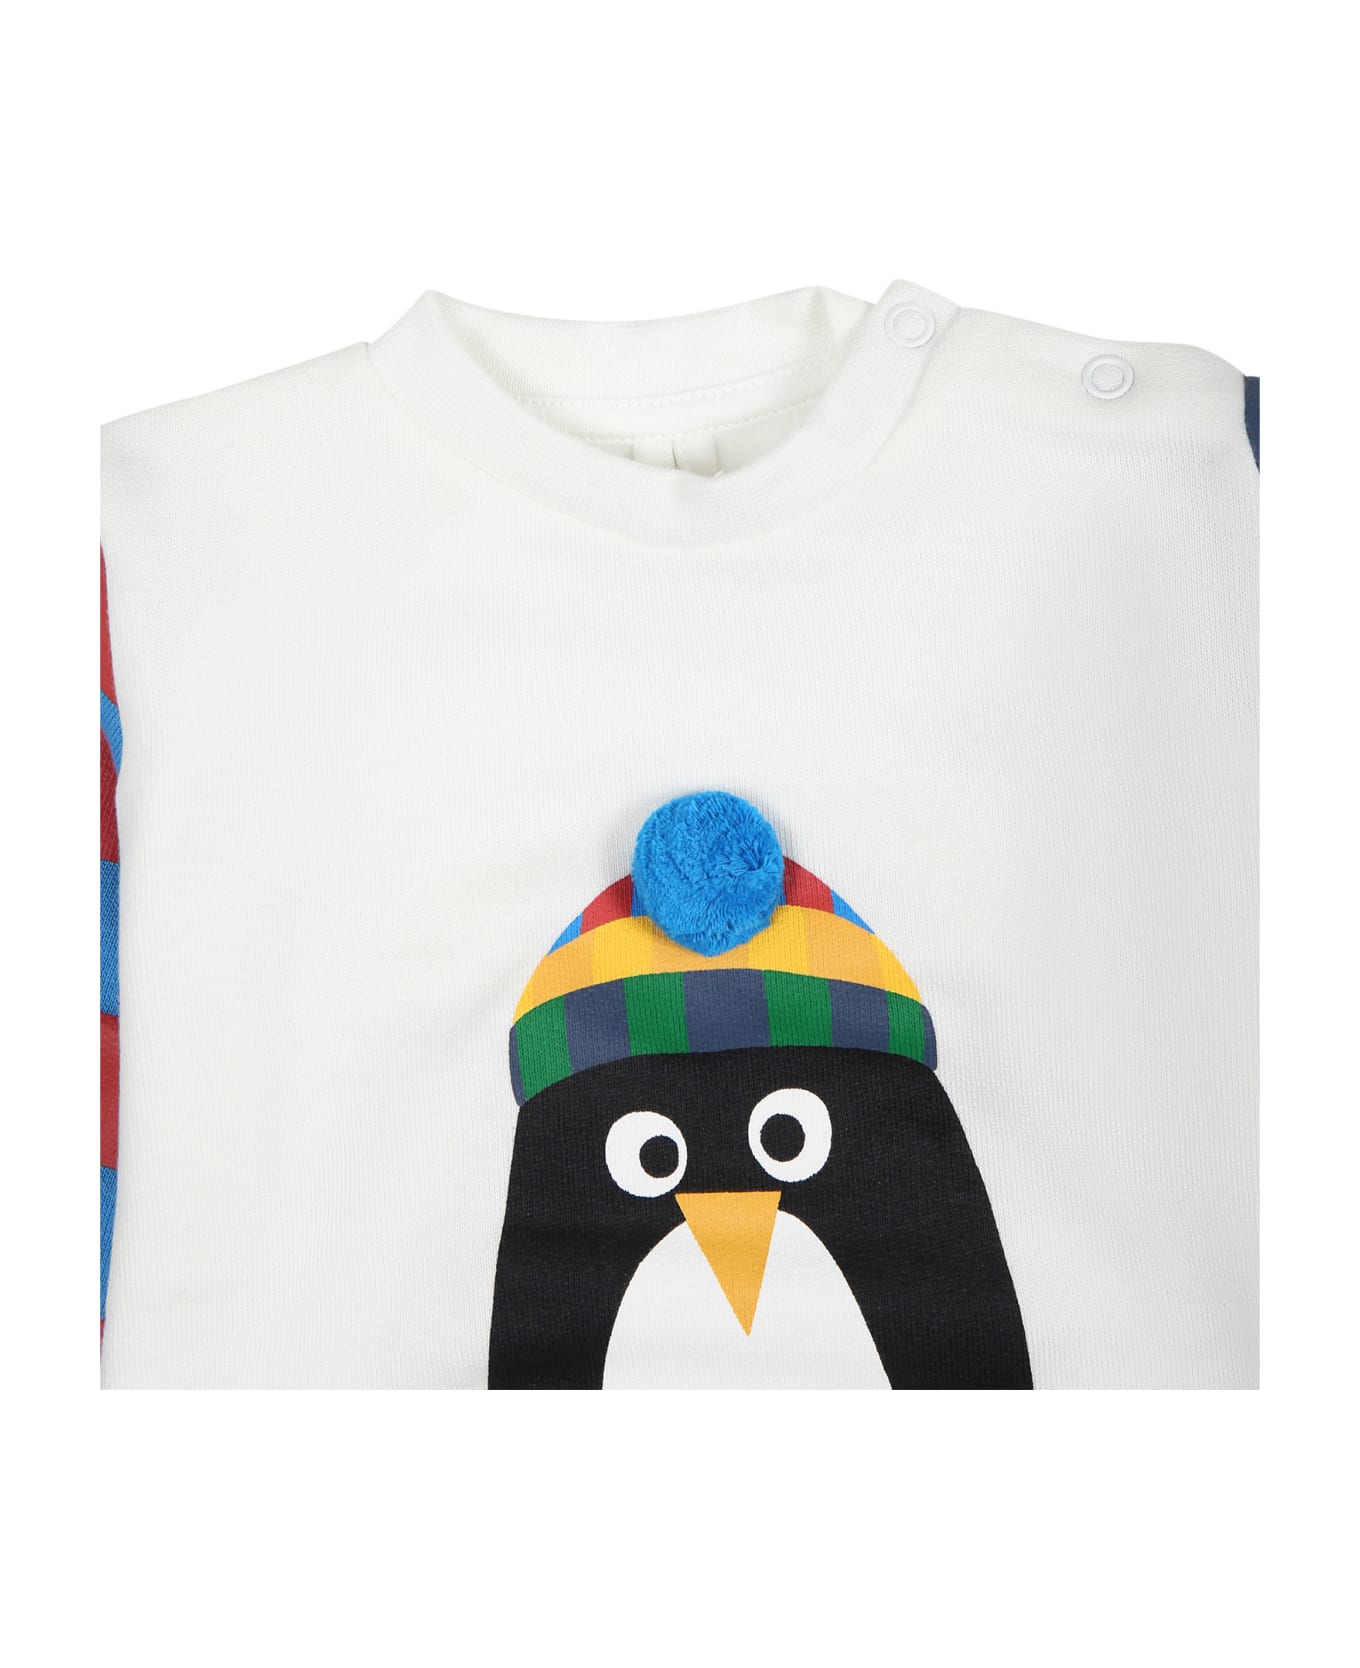 Stella McCartney Kids White Sweatshirt For Baby Boy With Penguin - White